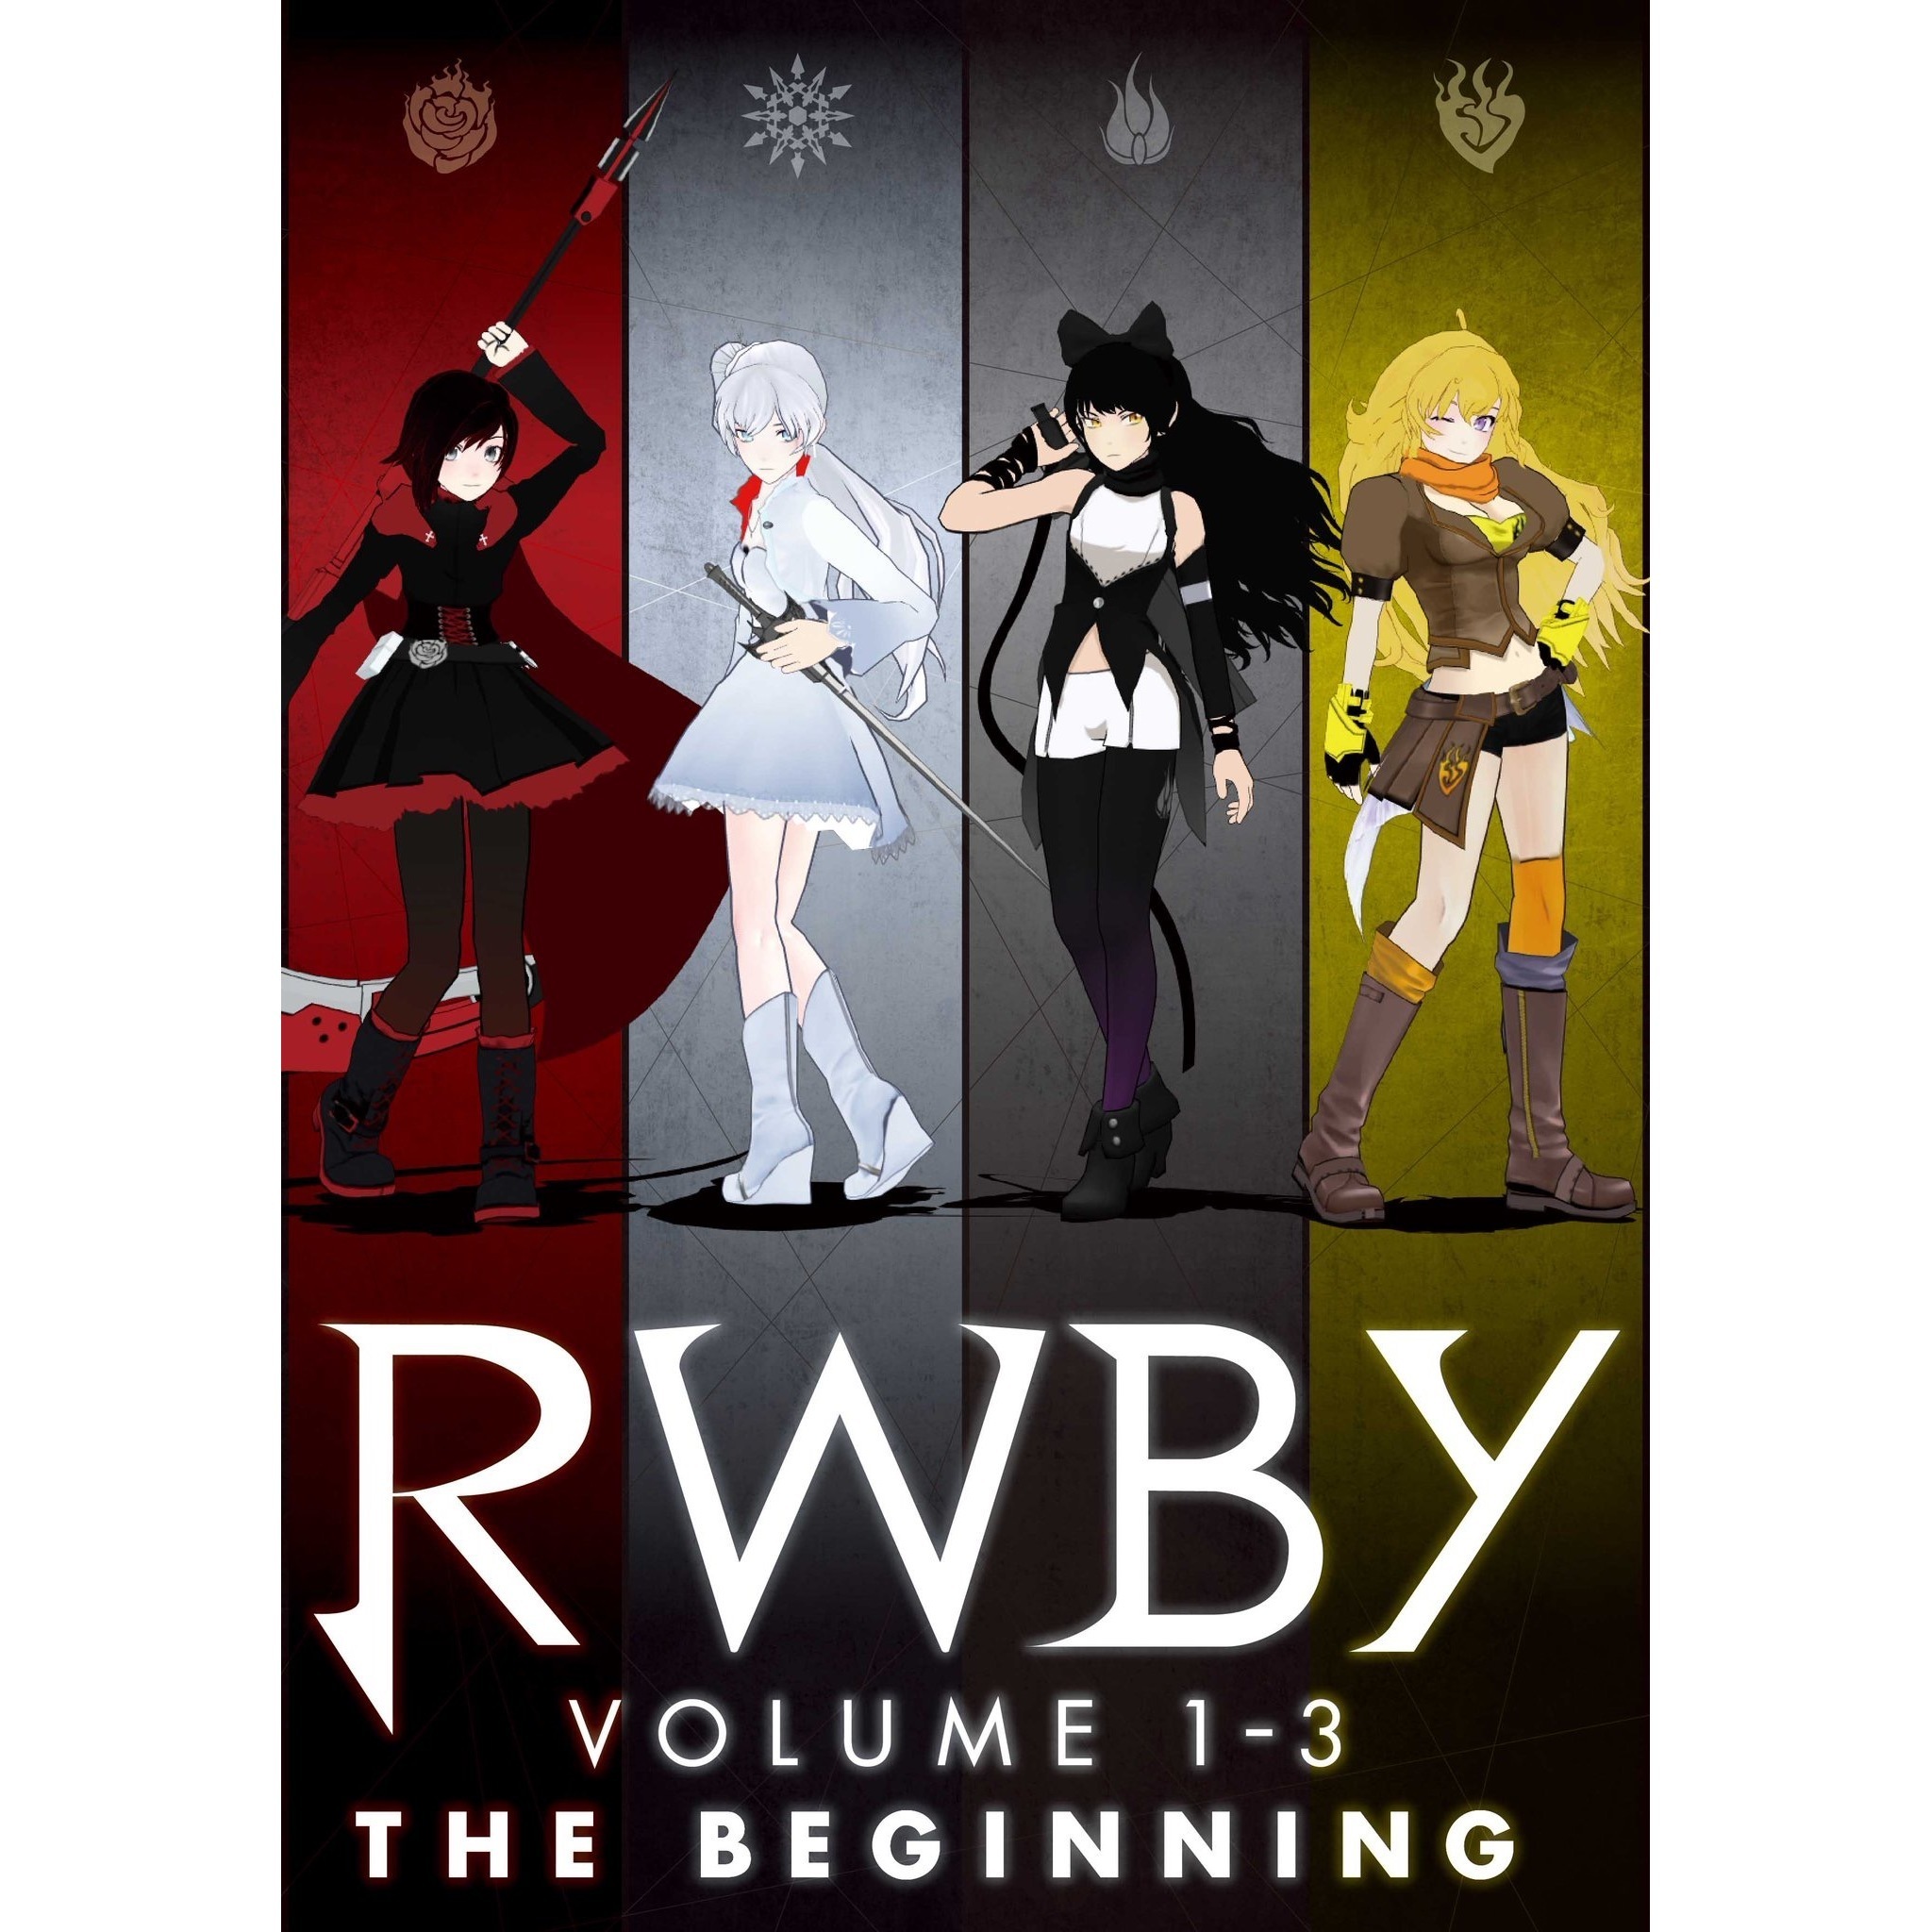 Rwby Volume 1 3 The Beginning Tvアニメ動画 の感想 評価 レビュー一覧 あにこれb